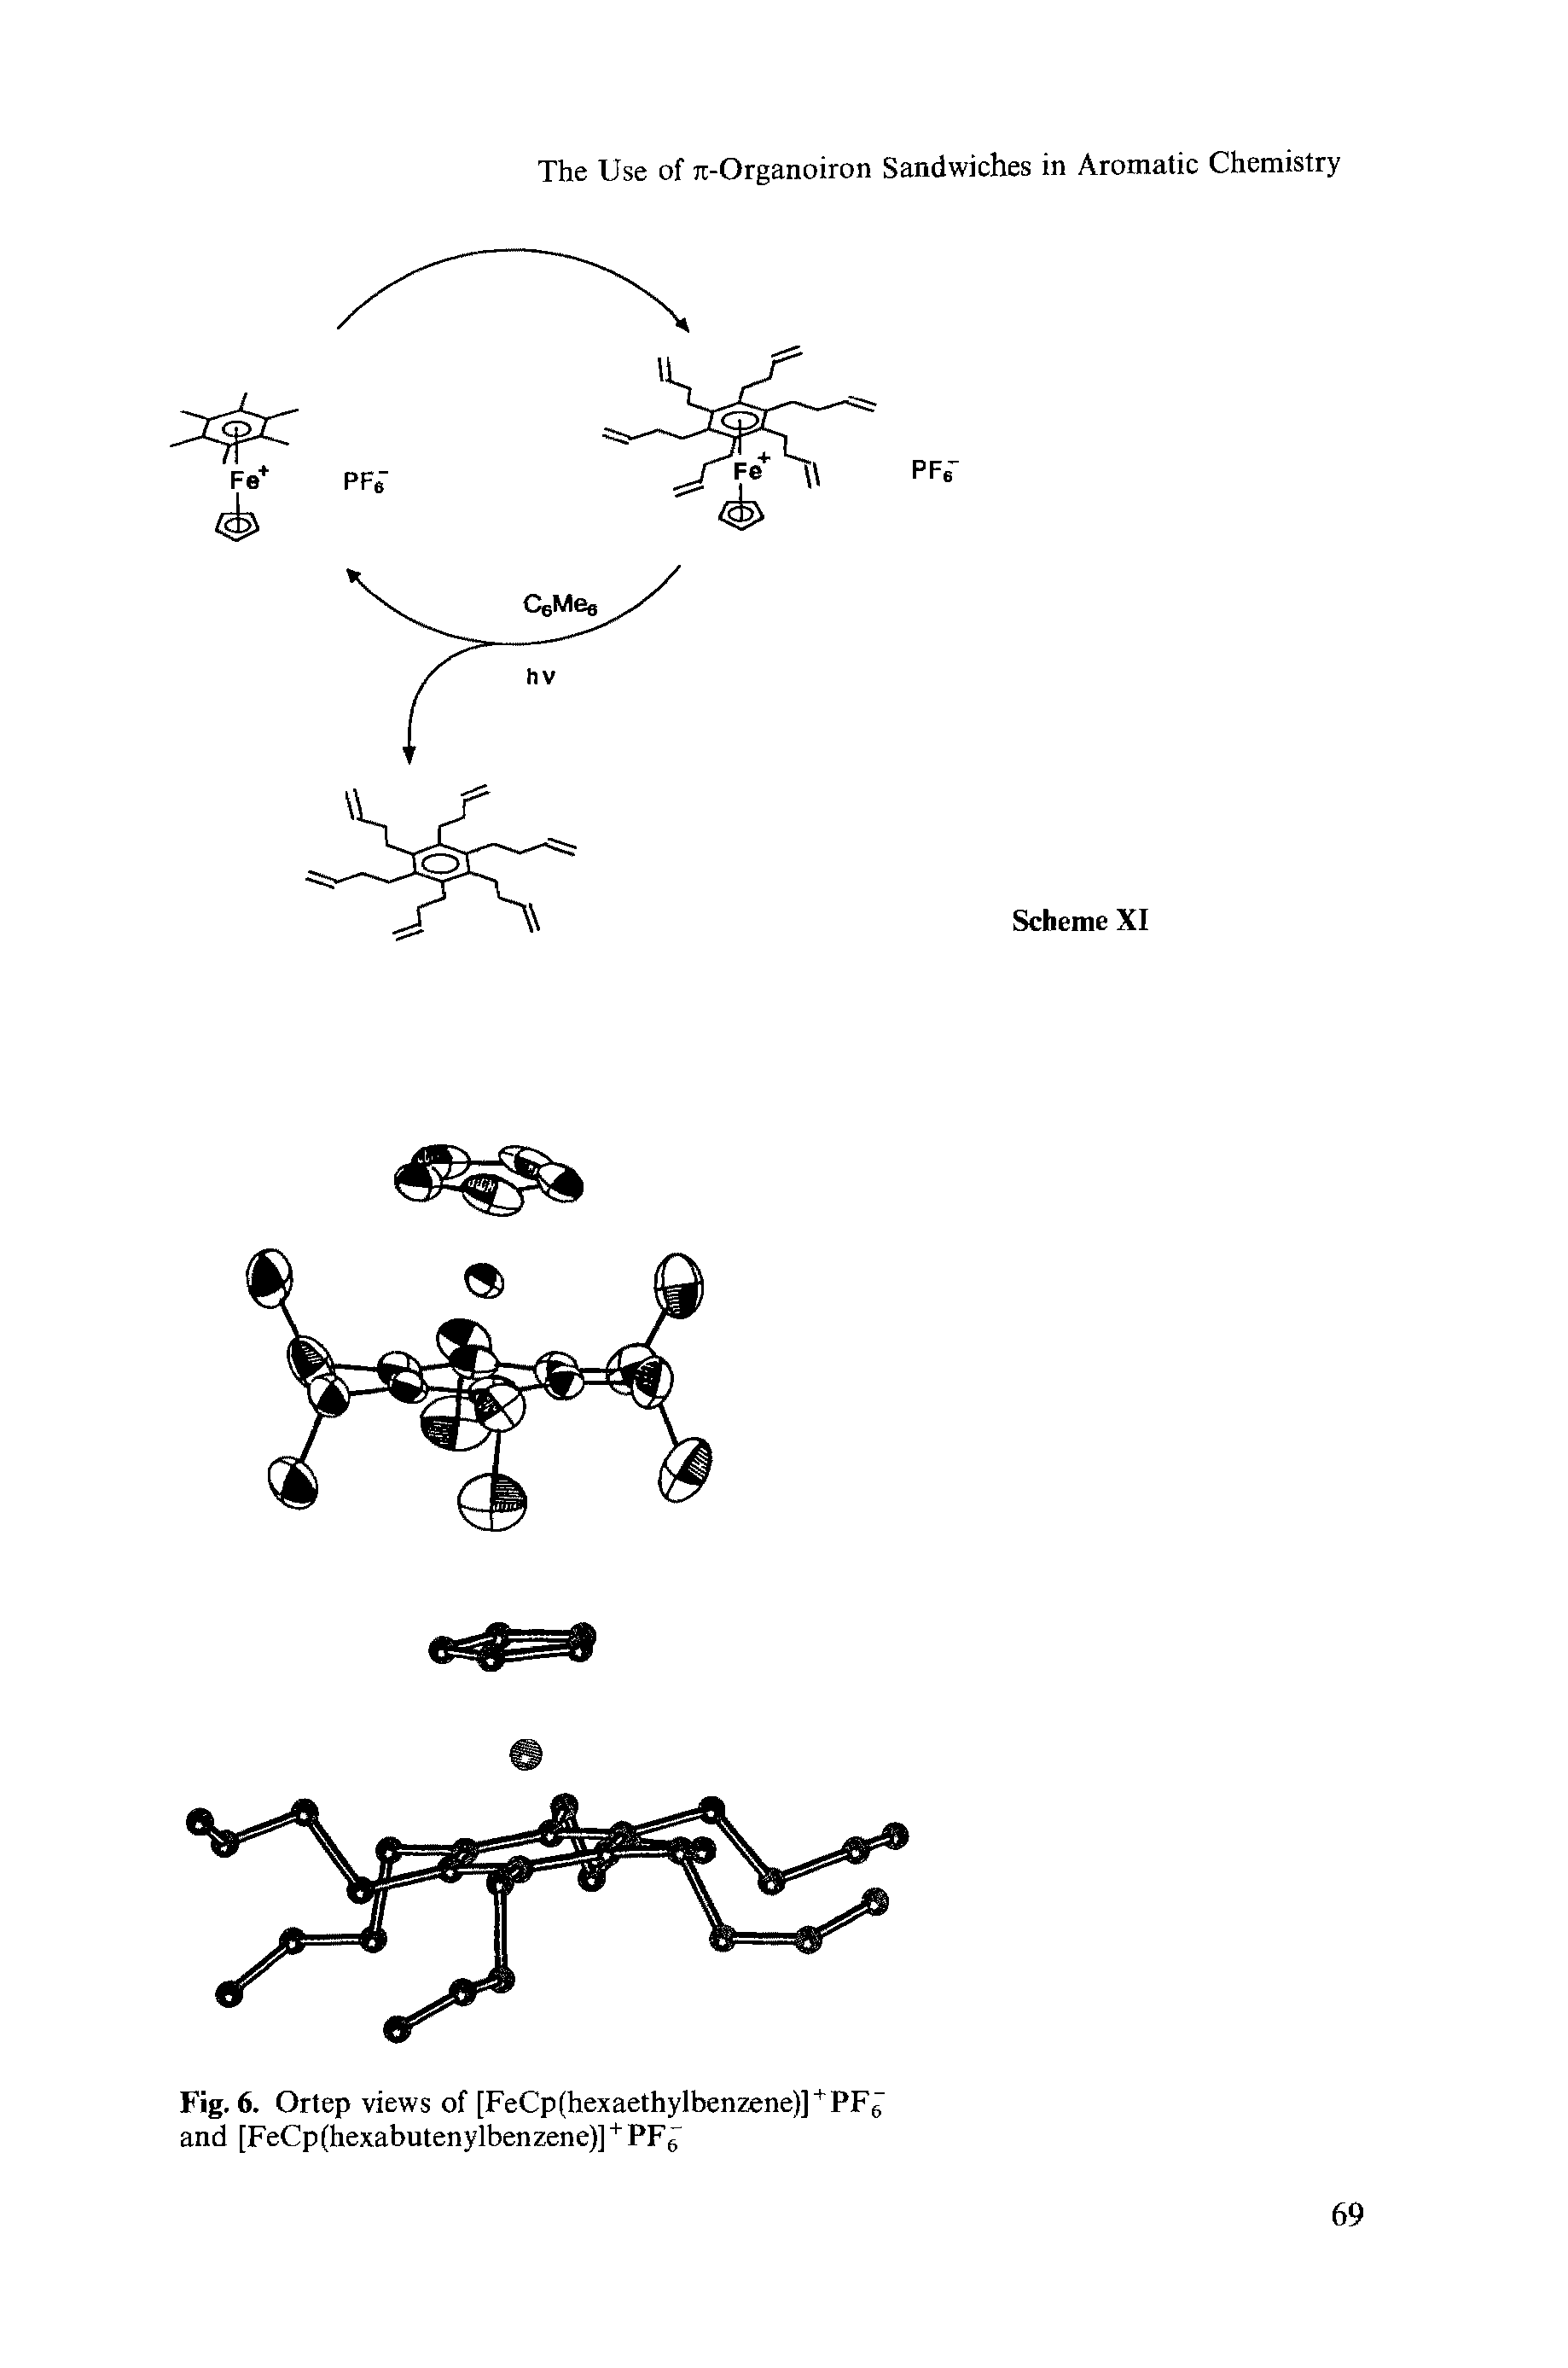 Fig. 6. Ortep views of [FeCp(hexaethylbenzene)] + PF6 and [FeCp(hexabutenylbenzene)]+ PF()...